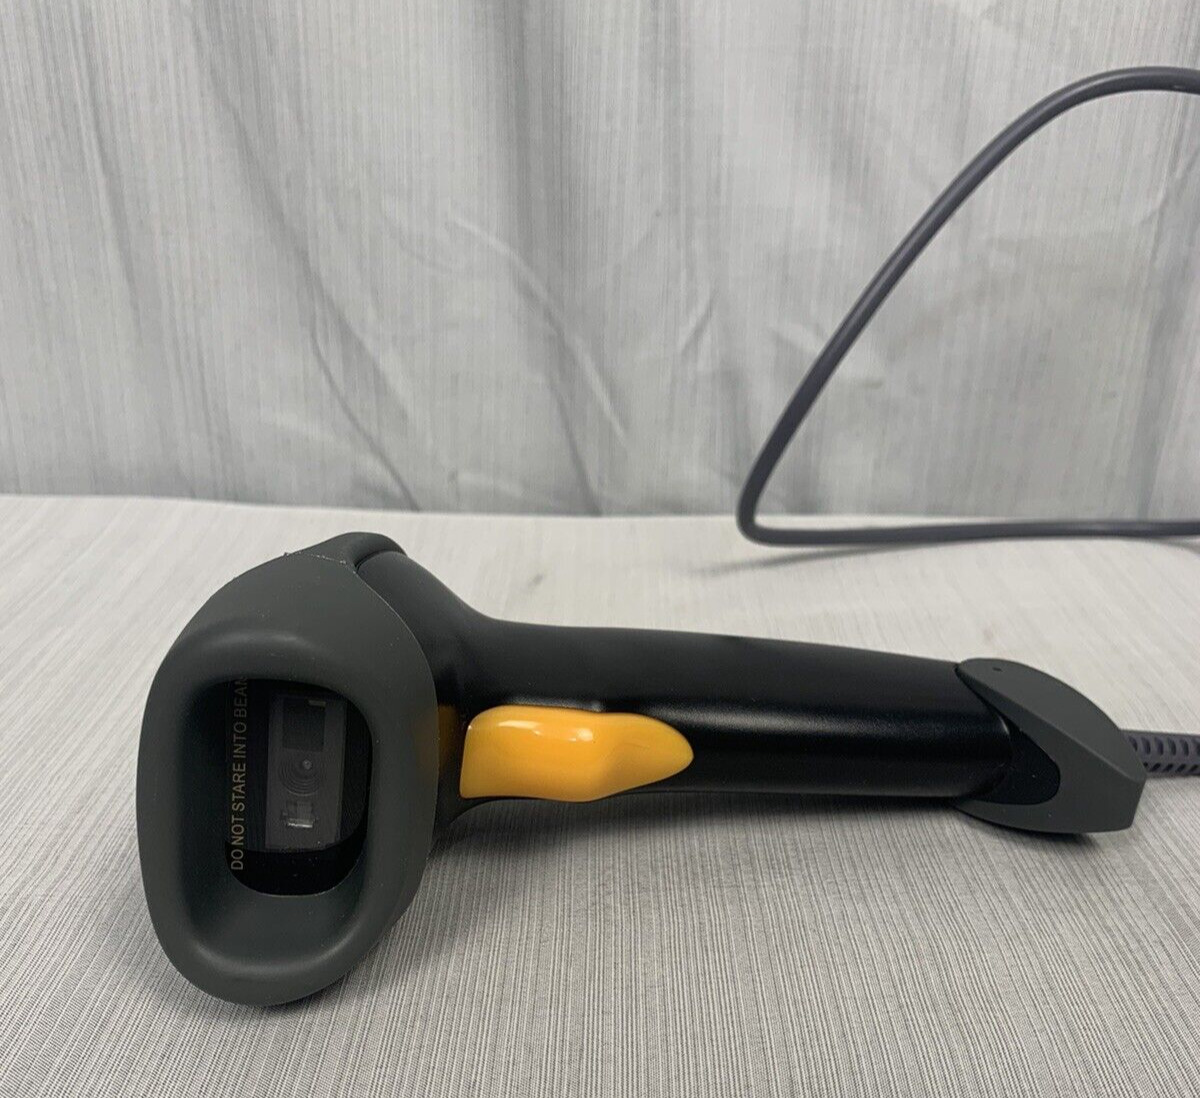 Eyoyo Handheld Barcode Scanner USB Wired Reader-Tested